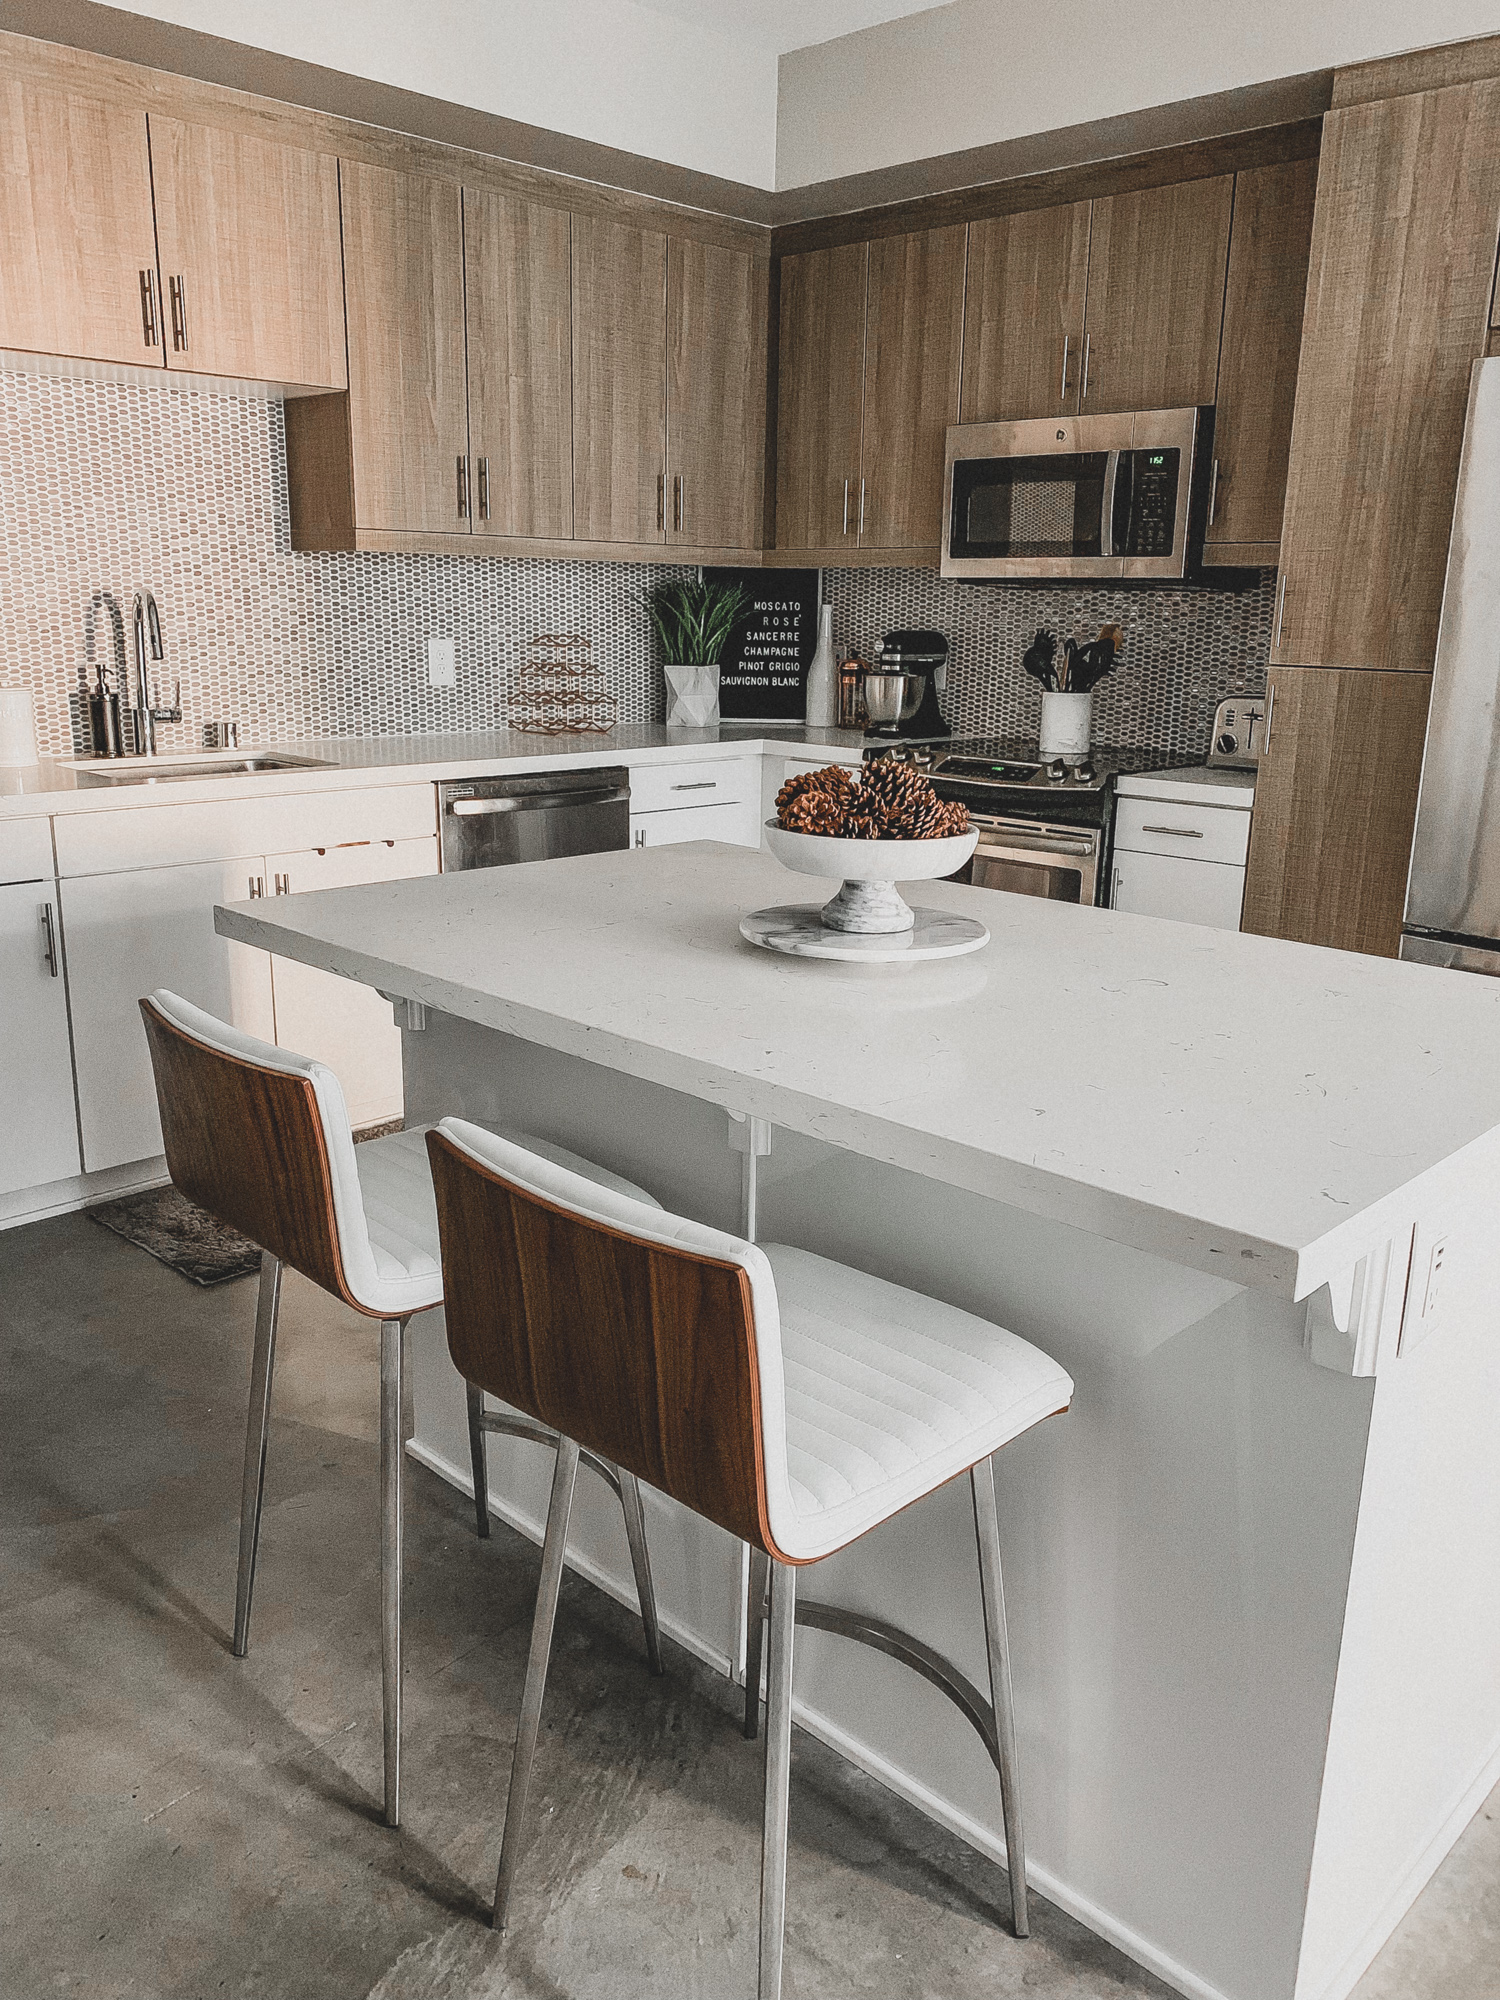 Modern Kitchen Decor | Marble & Wood Kitchen Decor | Home Decor | Apartment Decor | Blondie in the City by Hayley Larue